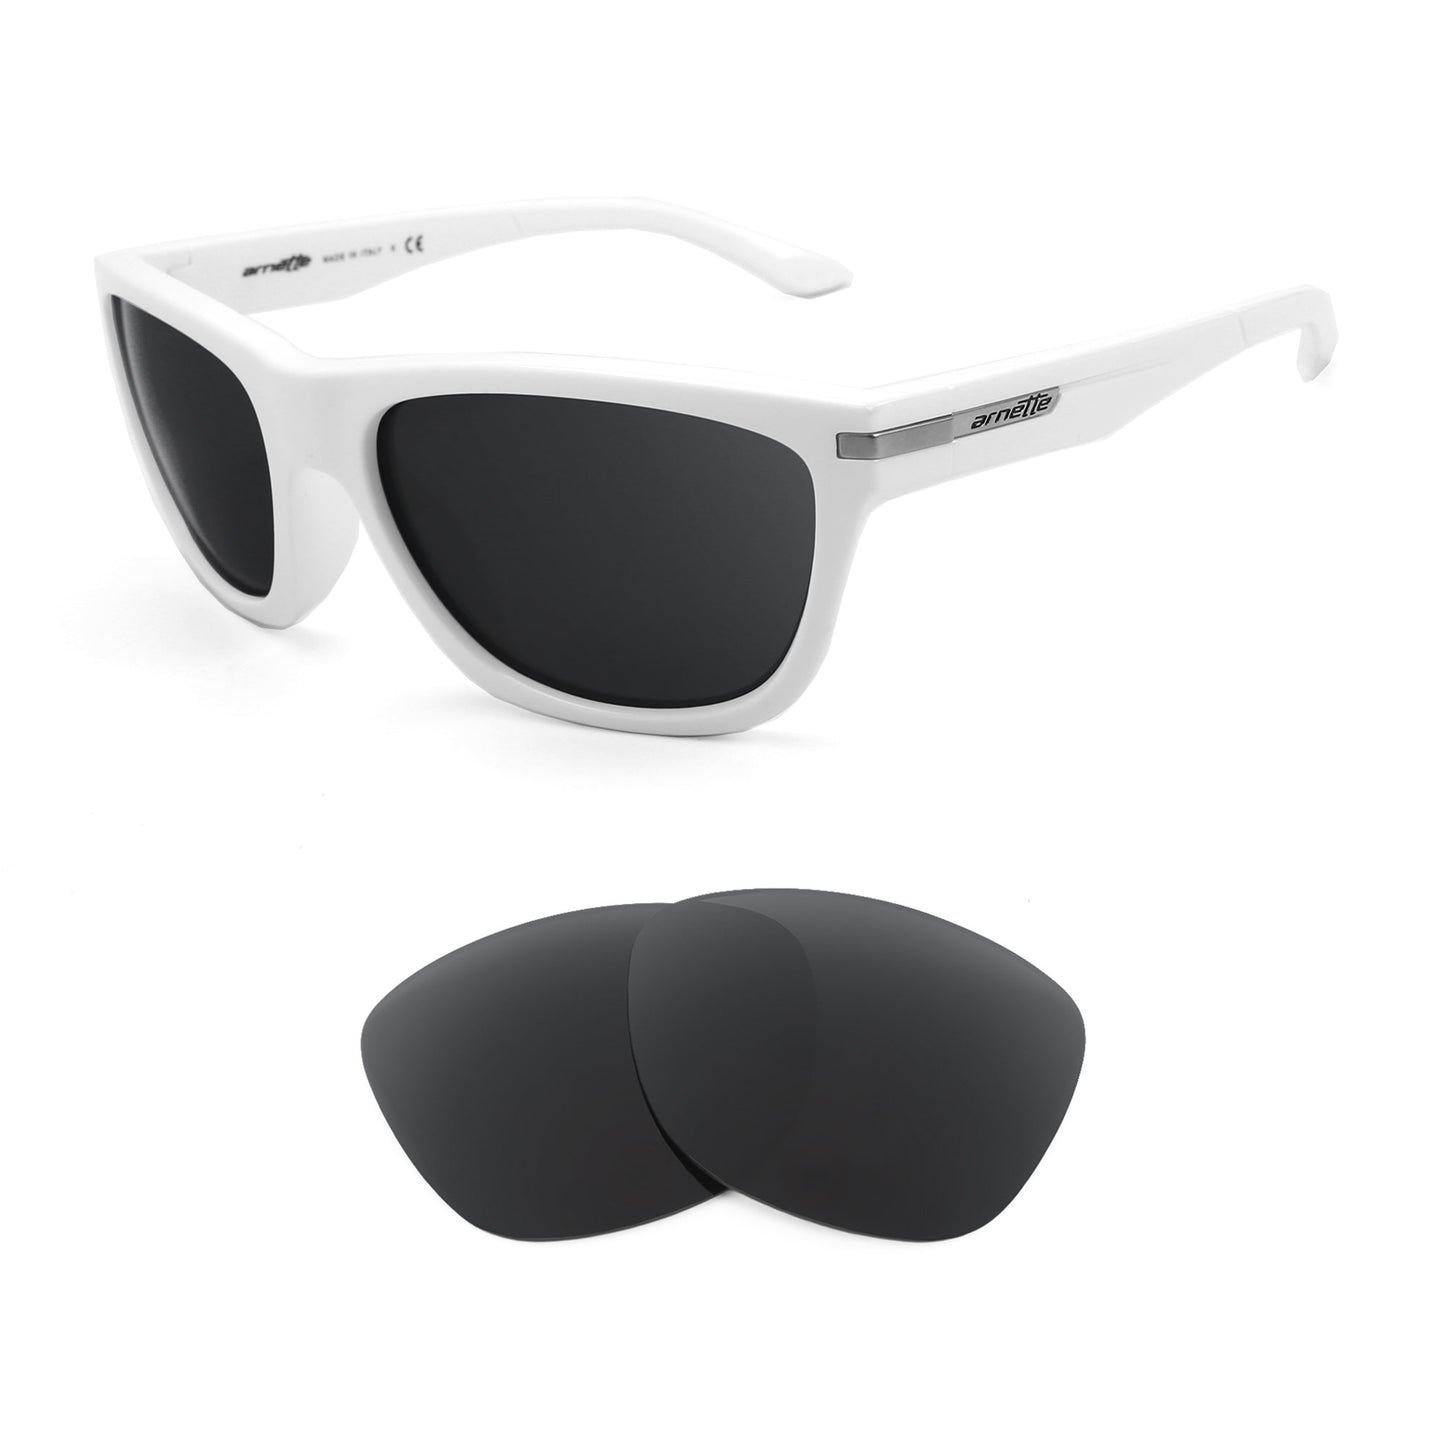 Arnette Venkman AN4141 sunglasses with replacement lenses